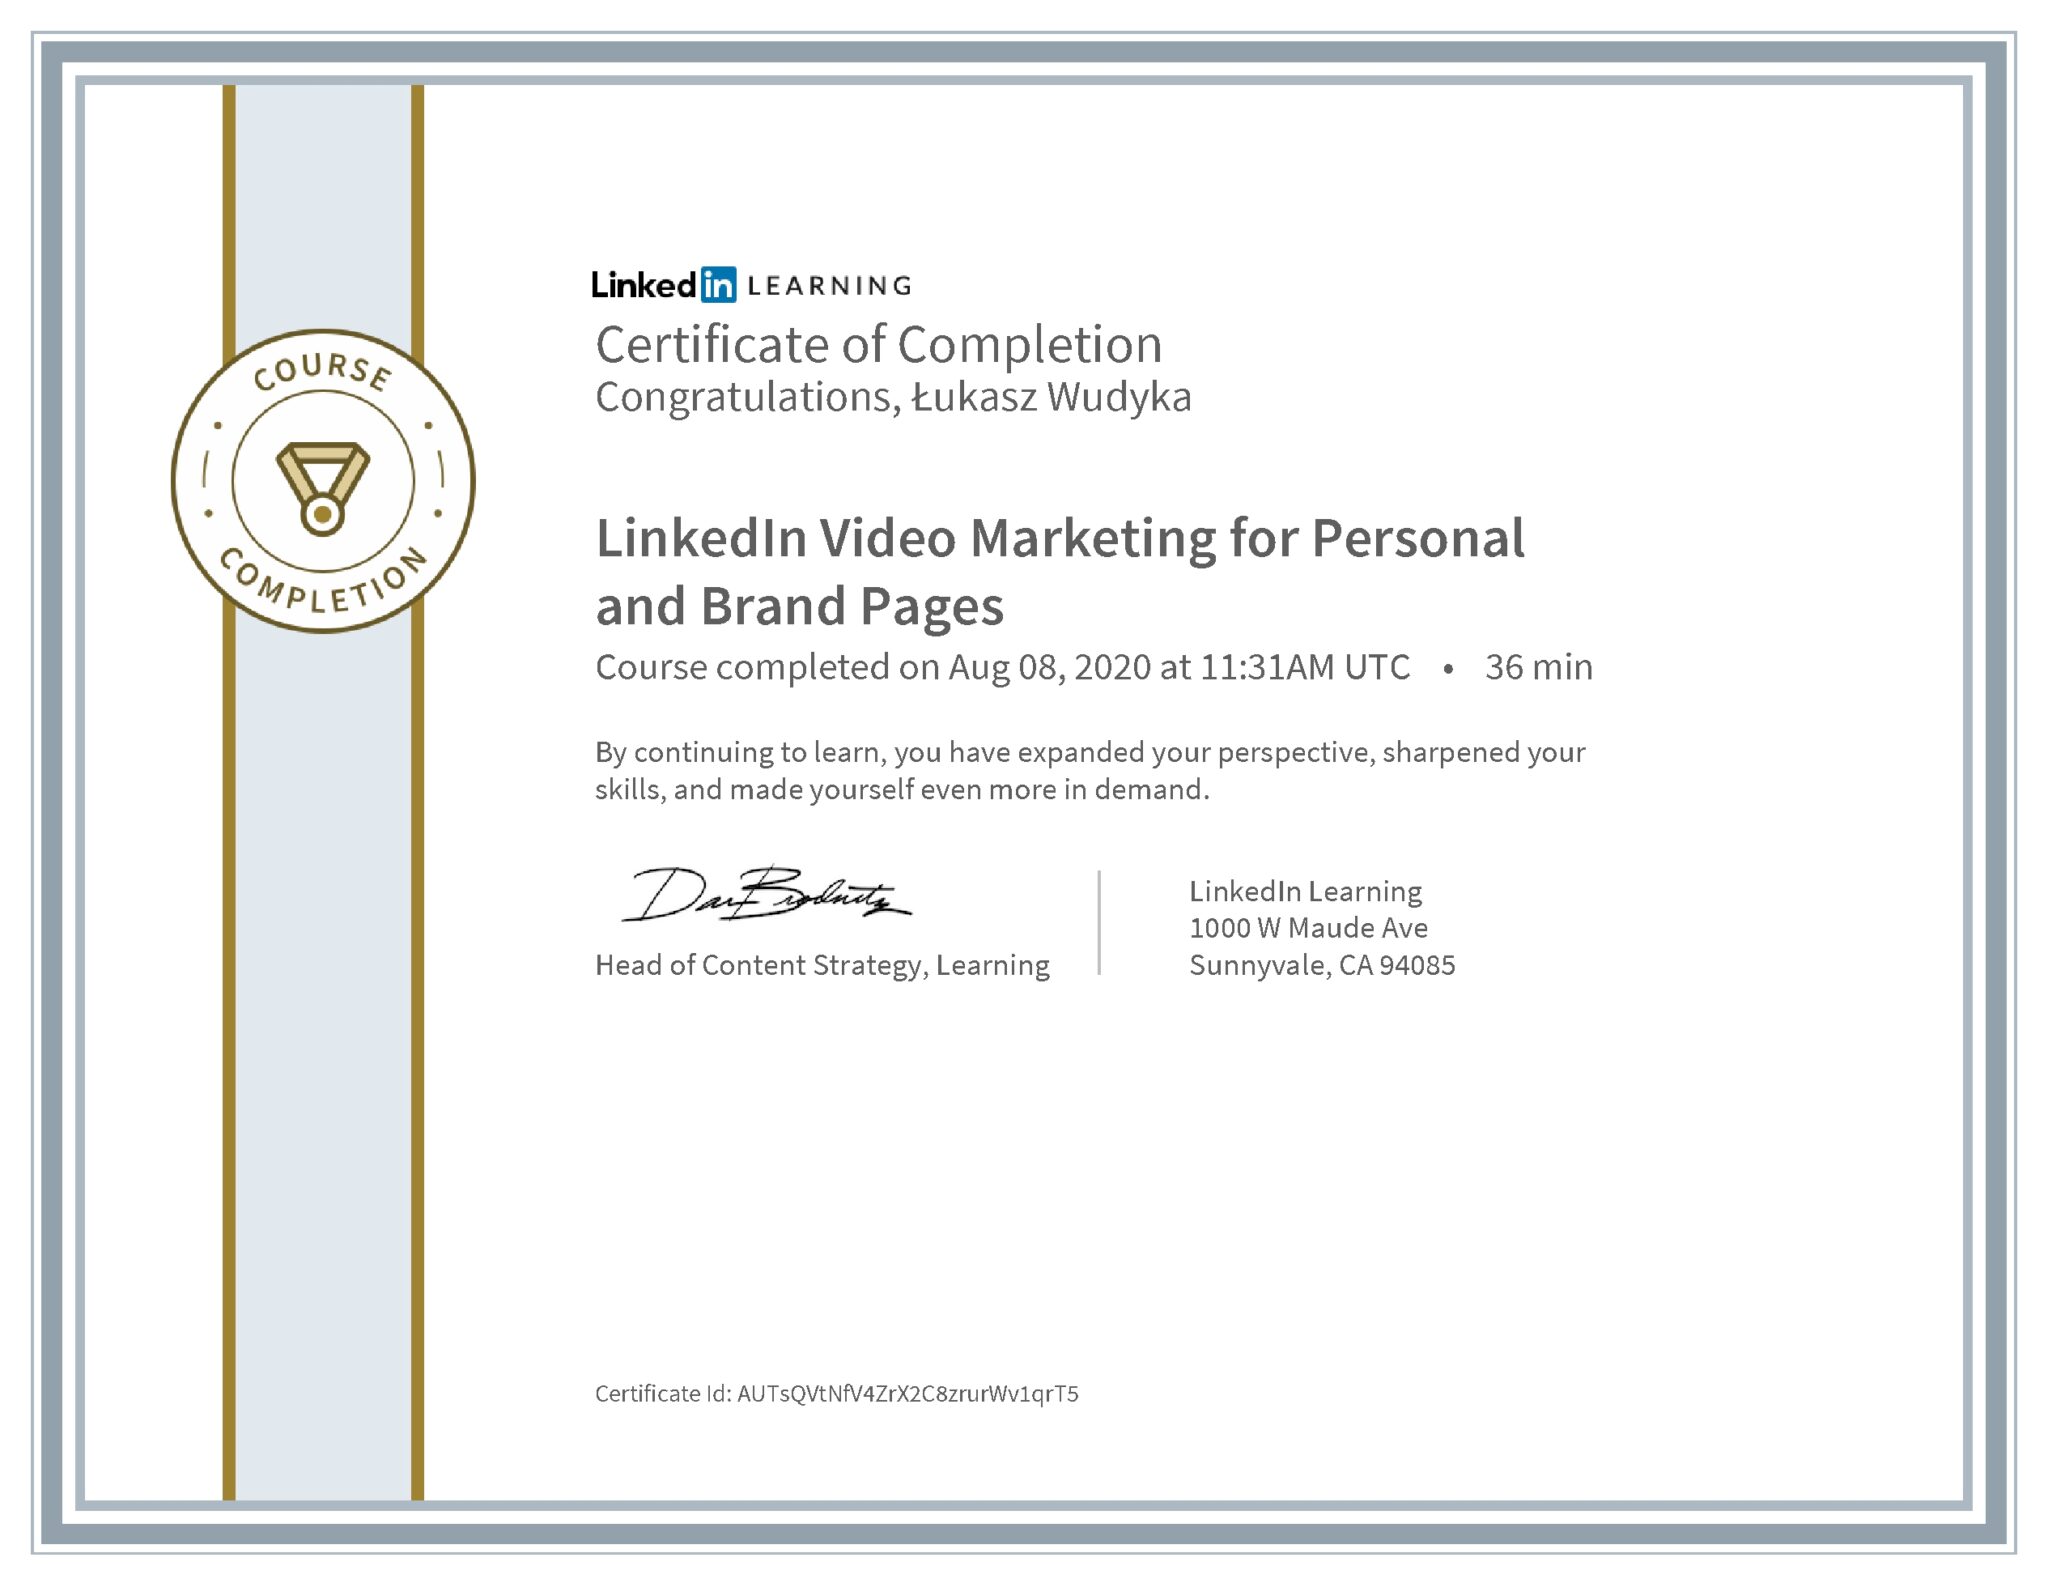 Łukasz Wudyka certyfikat LinkedIn LinkedIn Video Marketing for Personal and Brand Pages